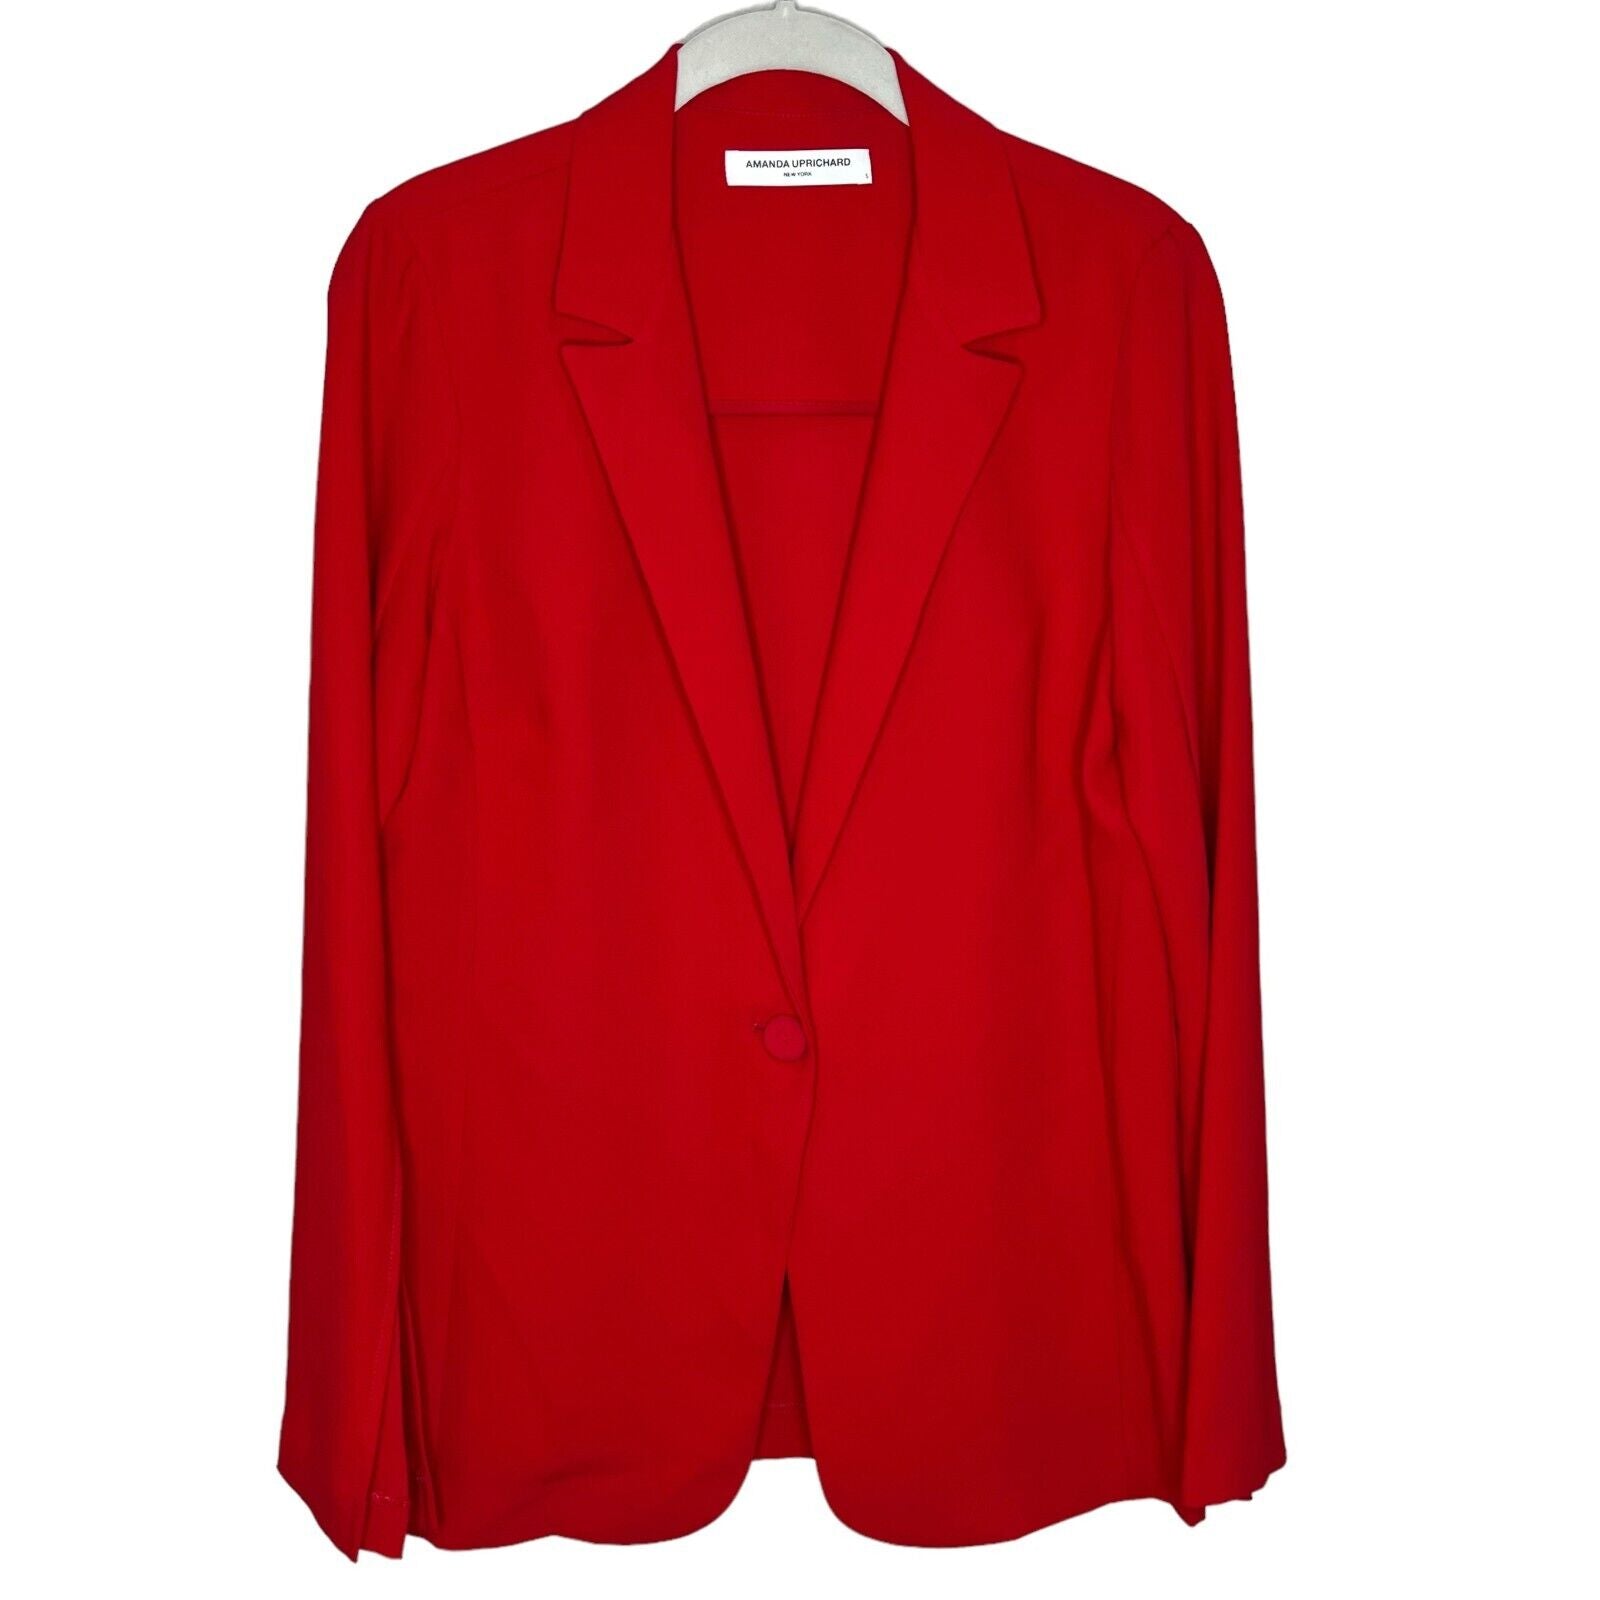 Amanda Uprichard Nolita Red Scarlett Blazer Tailored with Single Button Closure 